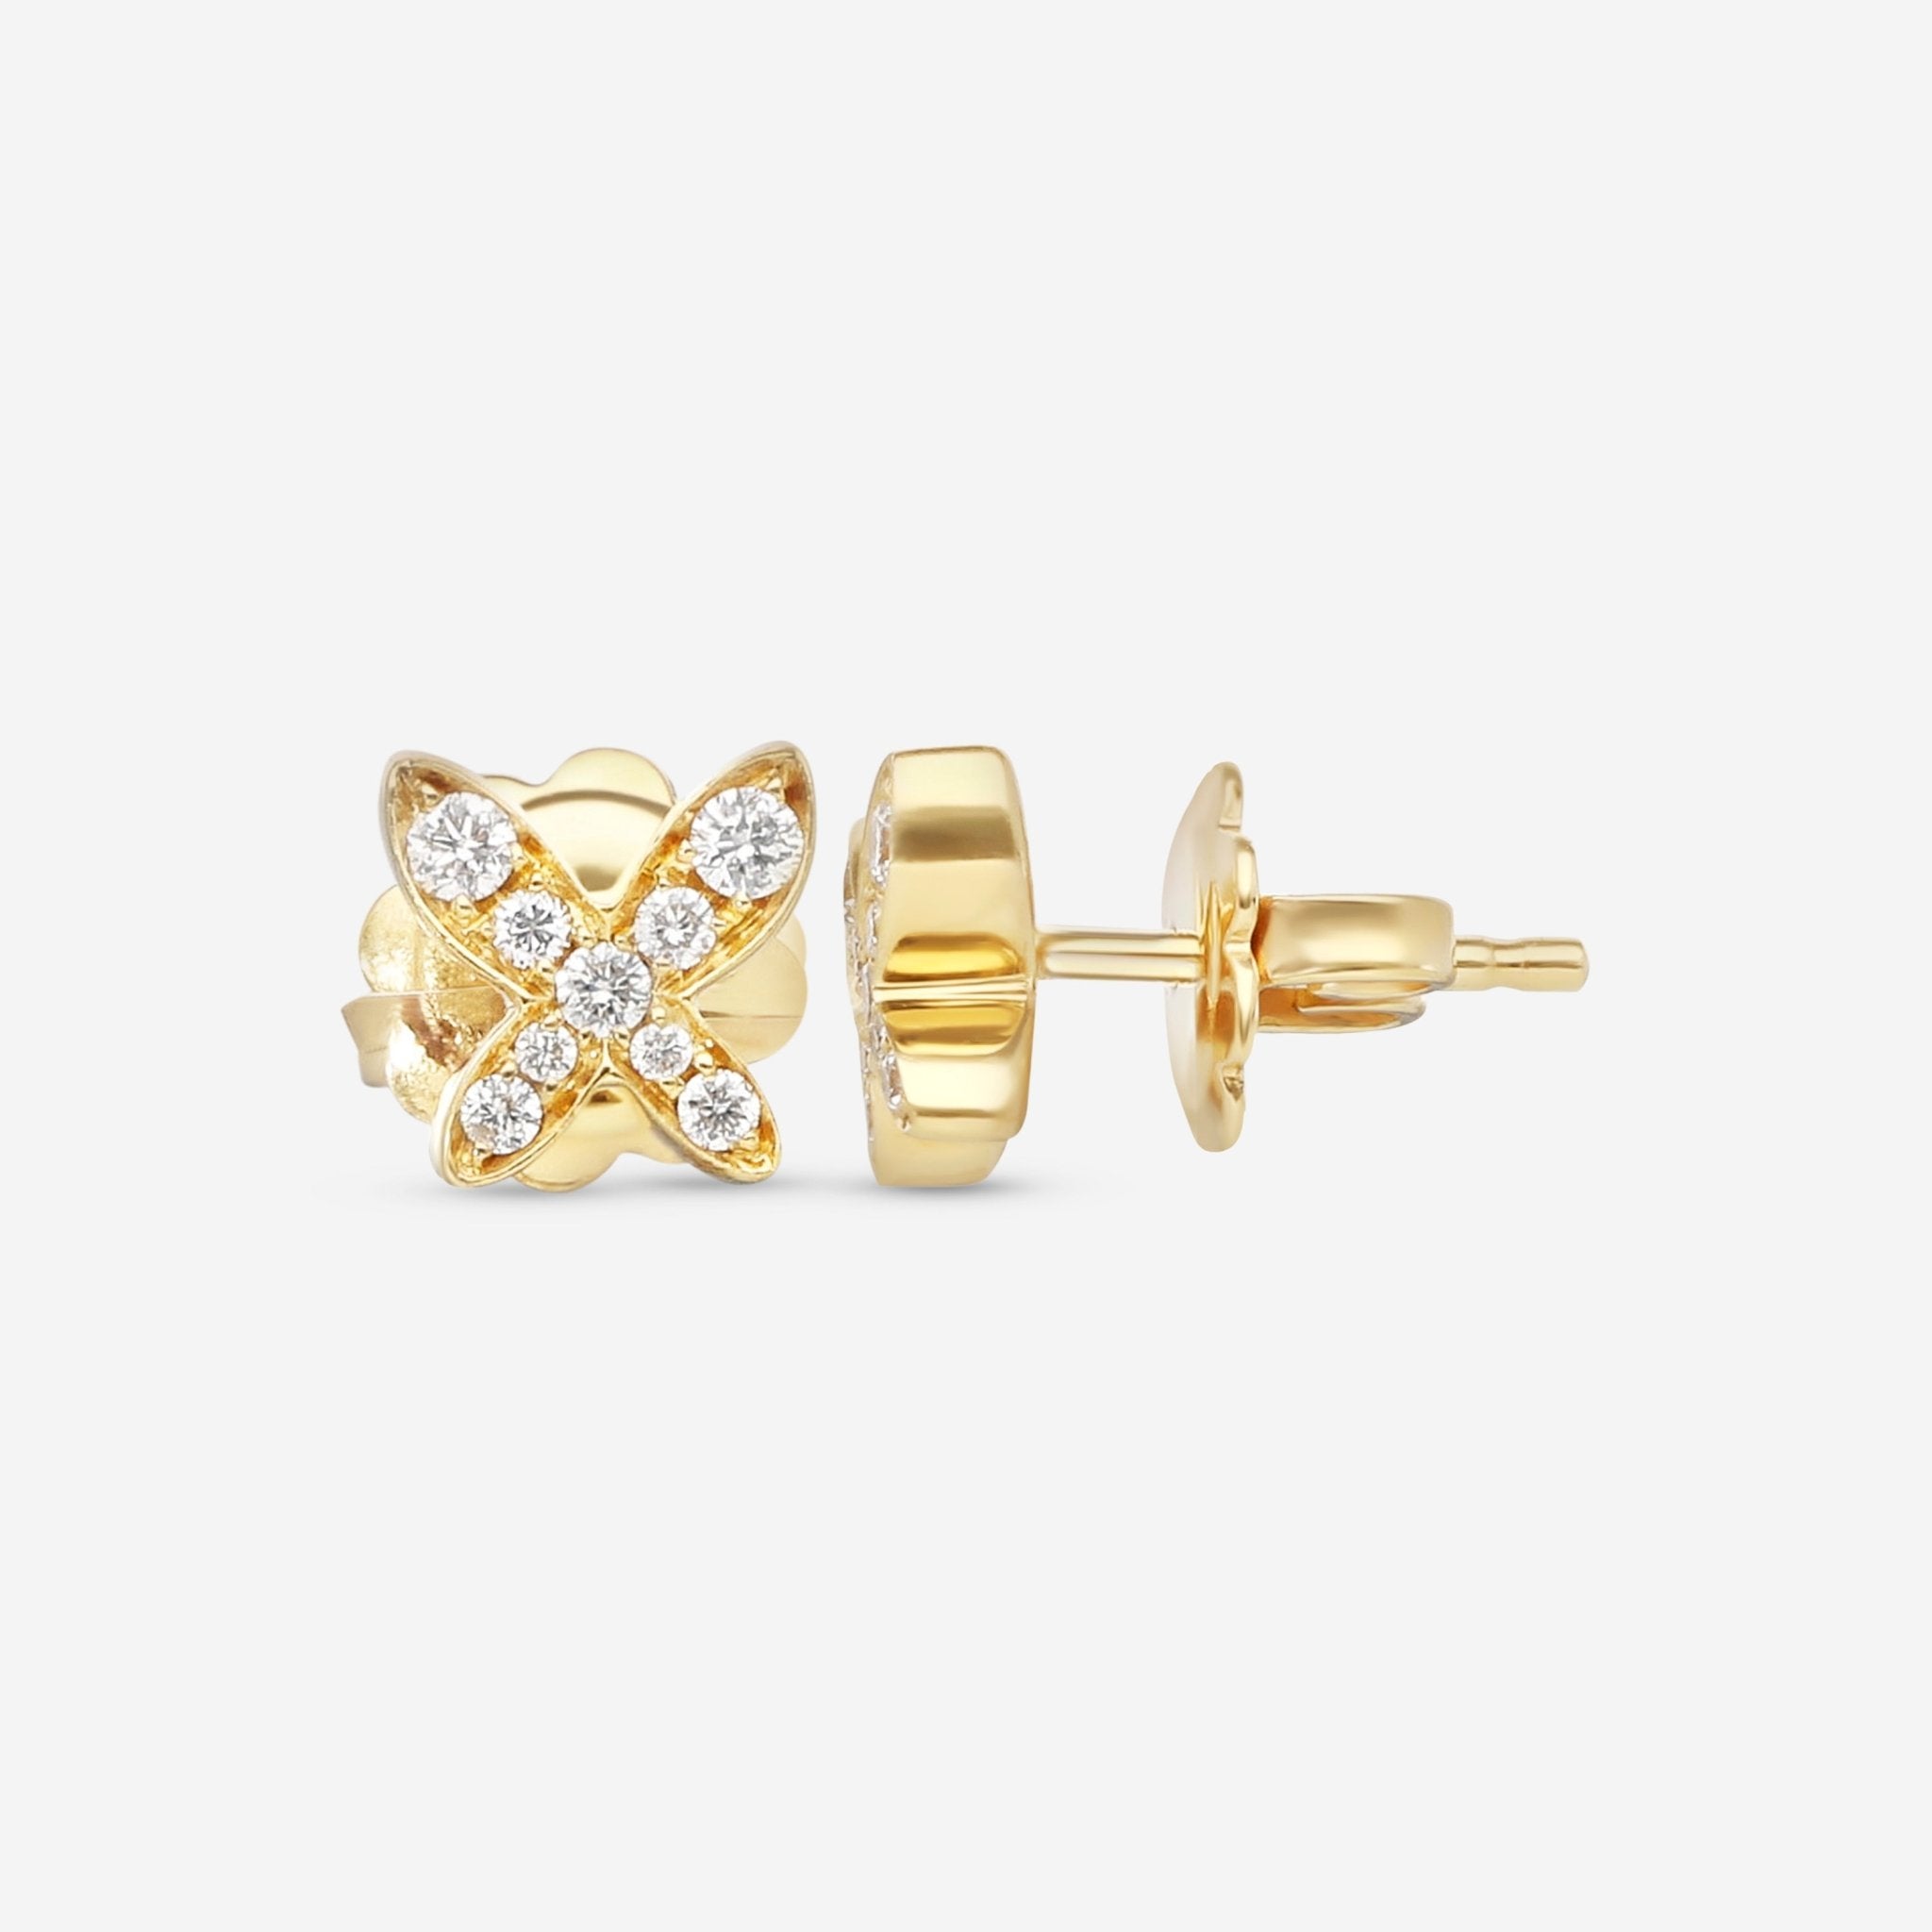 Mimi Milano Freevola 18K Yellow Gold, Diamond Stud Earrings OXM242G8B - THE SOLIST - Mimi Milano